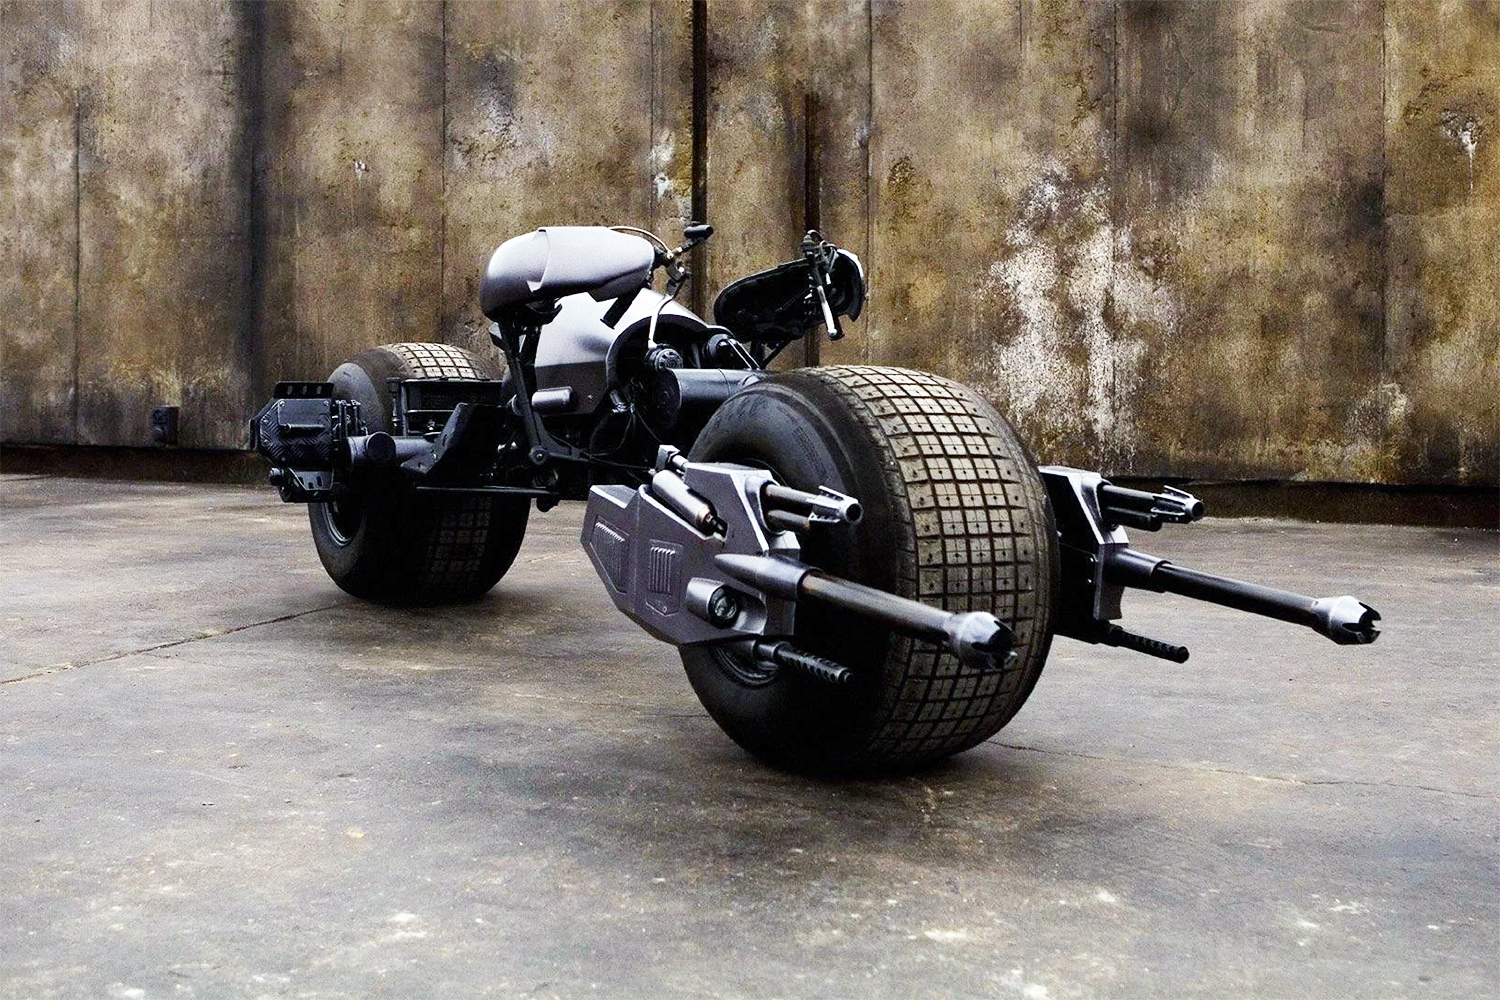 batman-batpod-motorcycle-auction-01